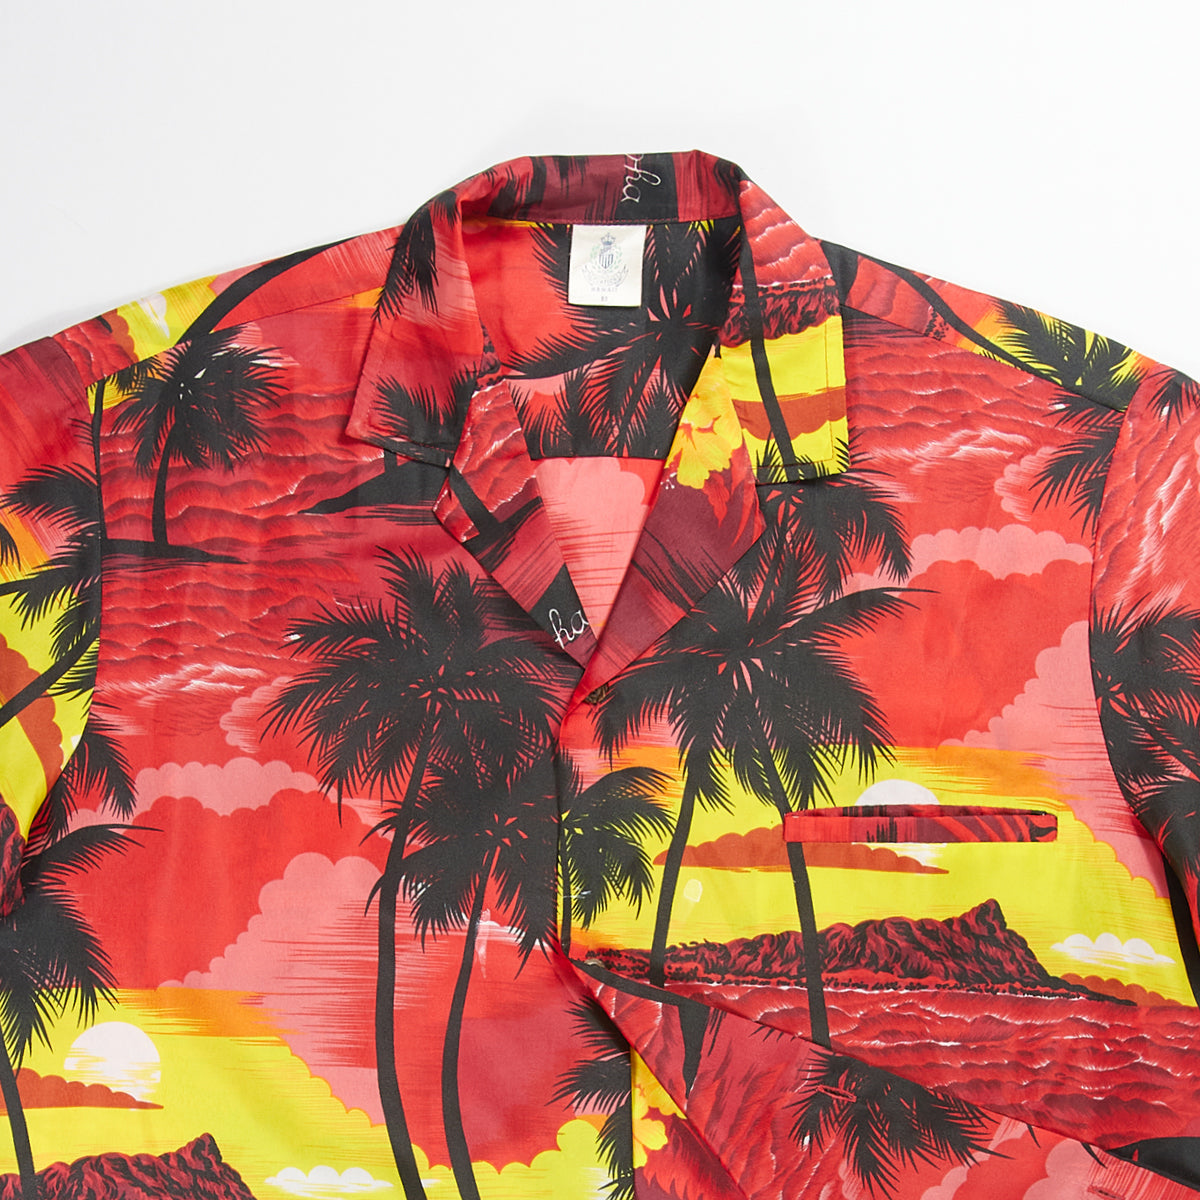 Red and Yellow Sunset Hawaiian Shirt S/S